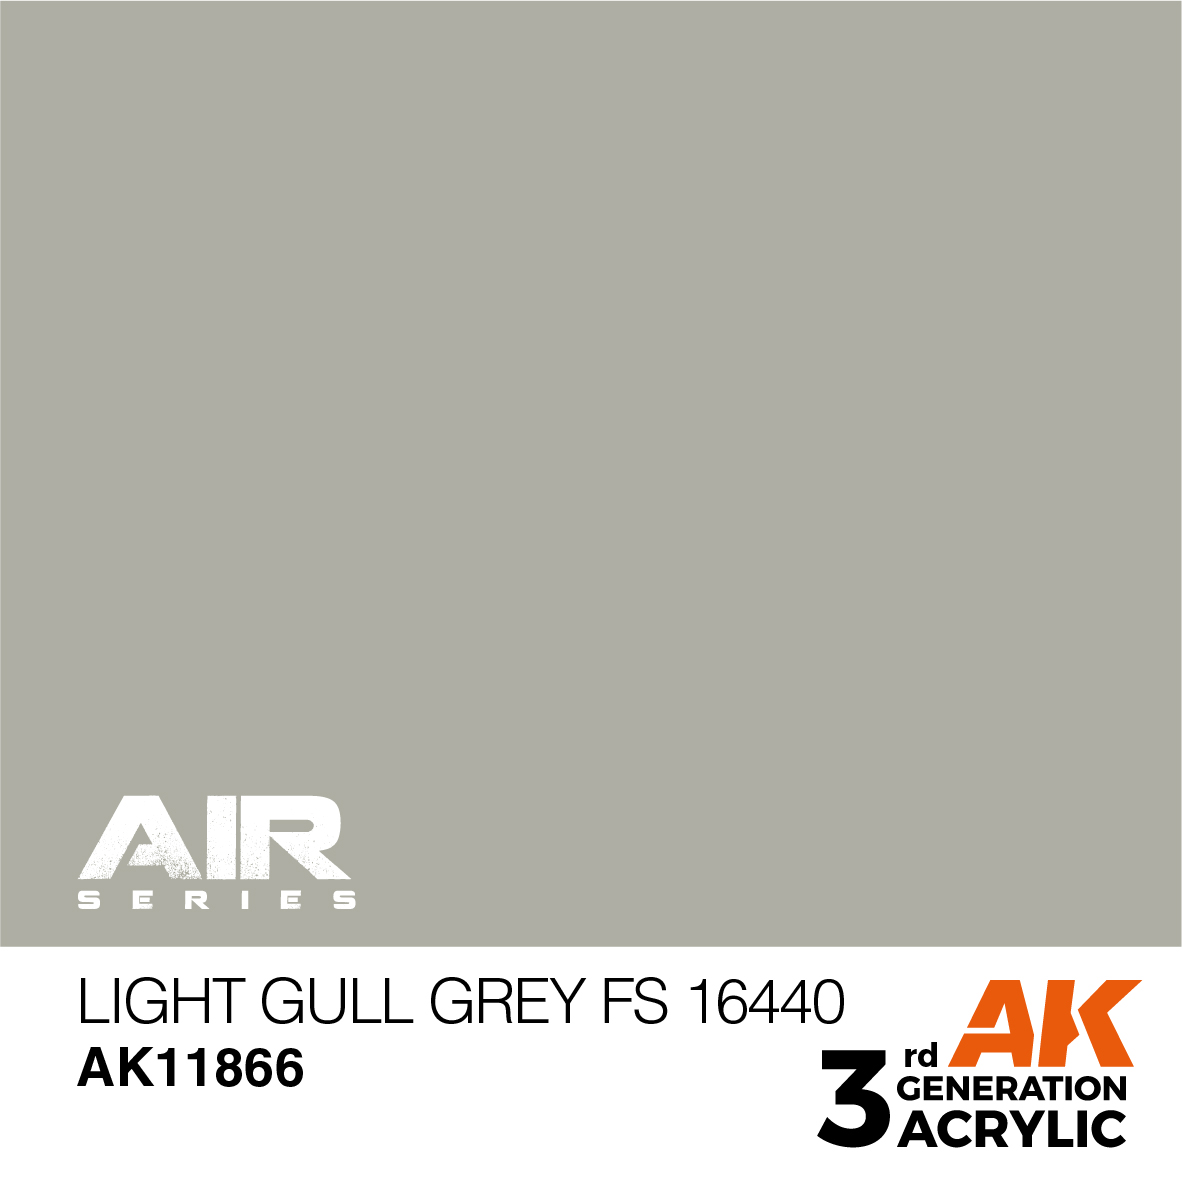 Light Gull Grey FS 16440 – AIR